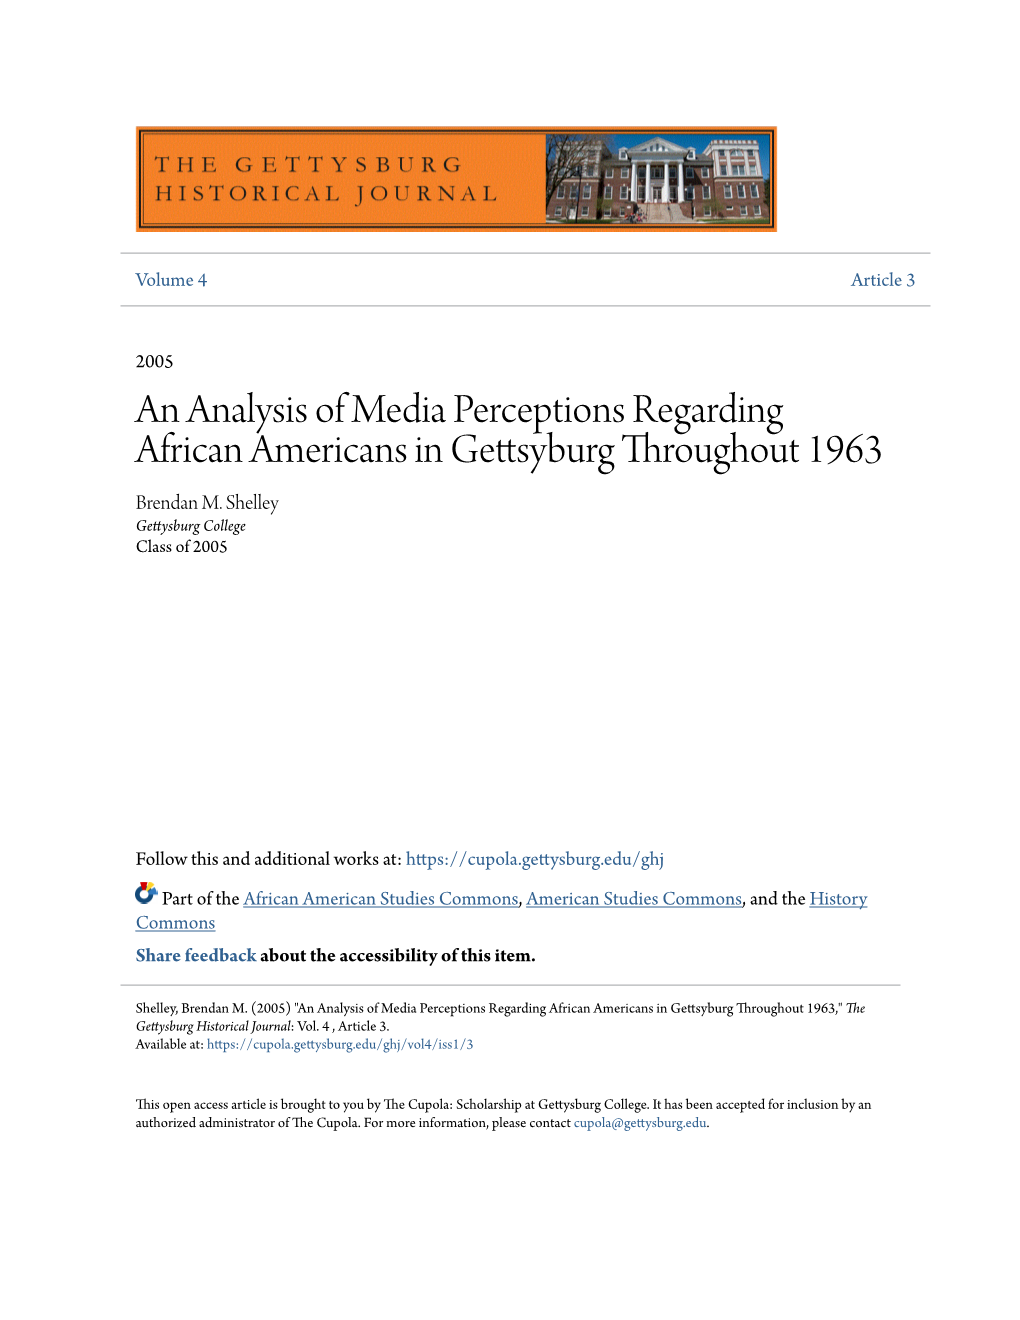 An Analysis of Media Perceptions Regarding African Americans in Gettsyburg Throughout 1963 Brendan M